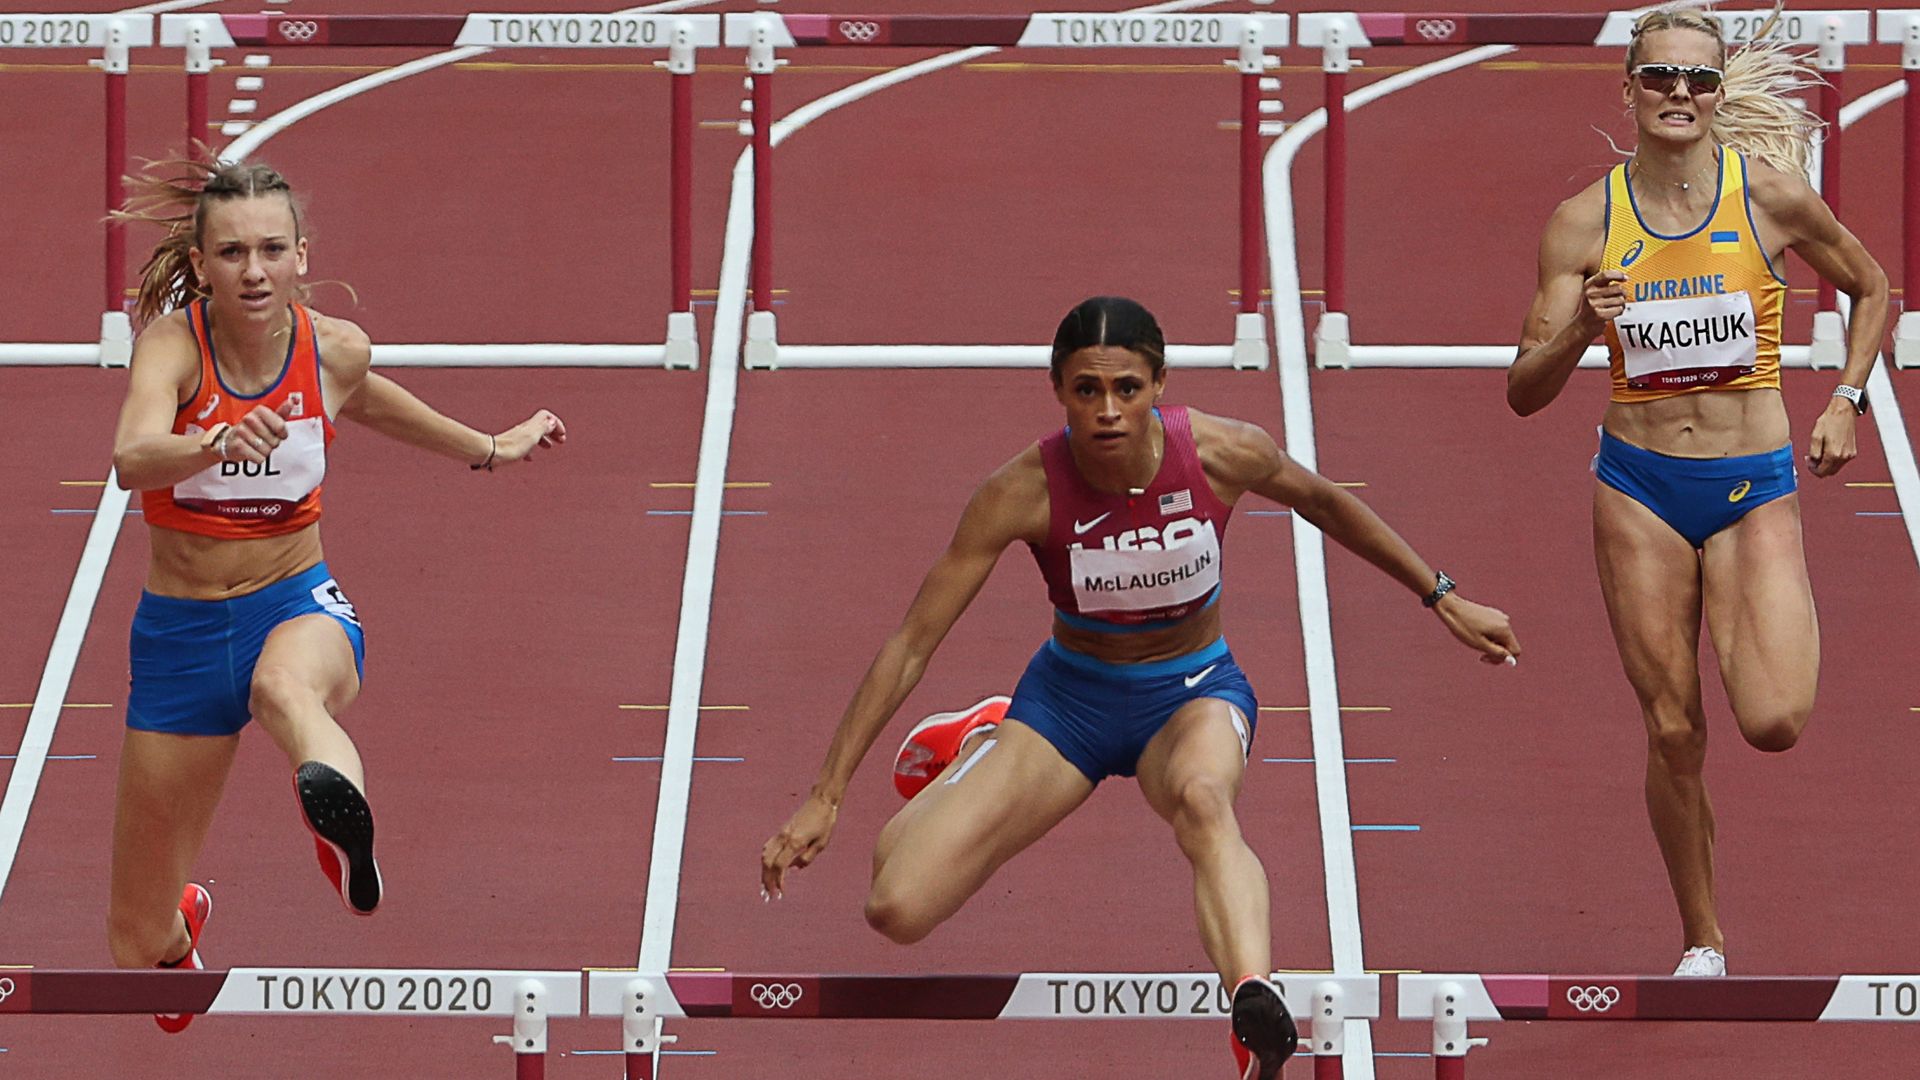 Sydney McLaughlin wins women's Olympic 400m hurdles gold, breaks record